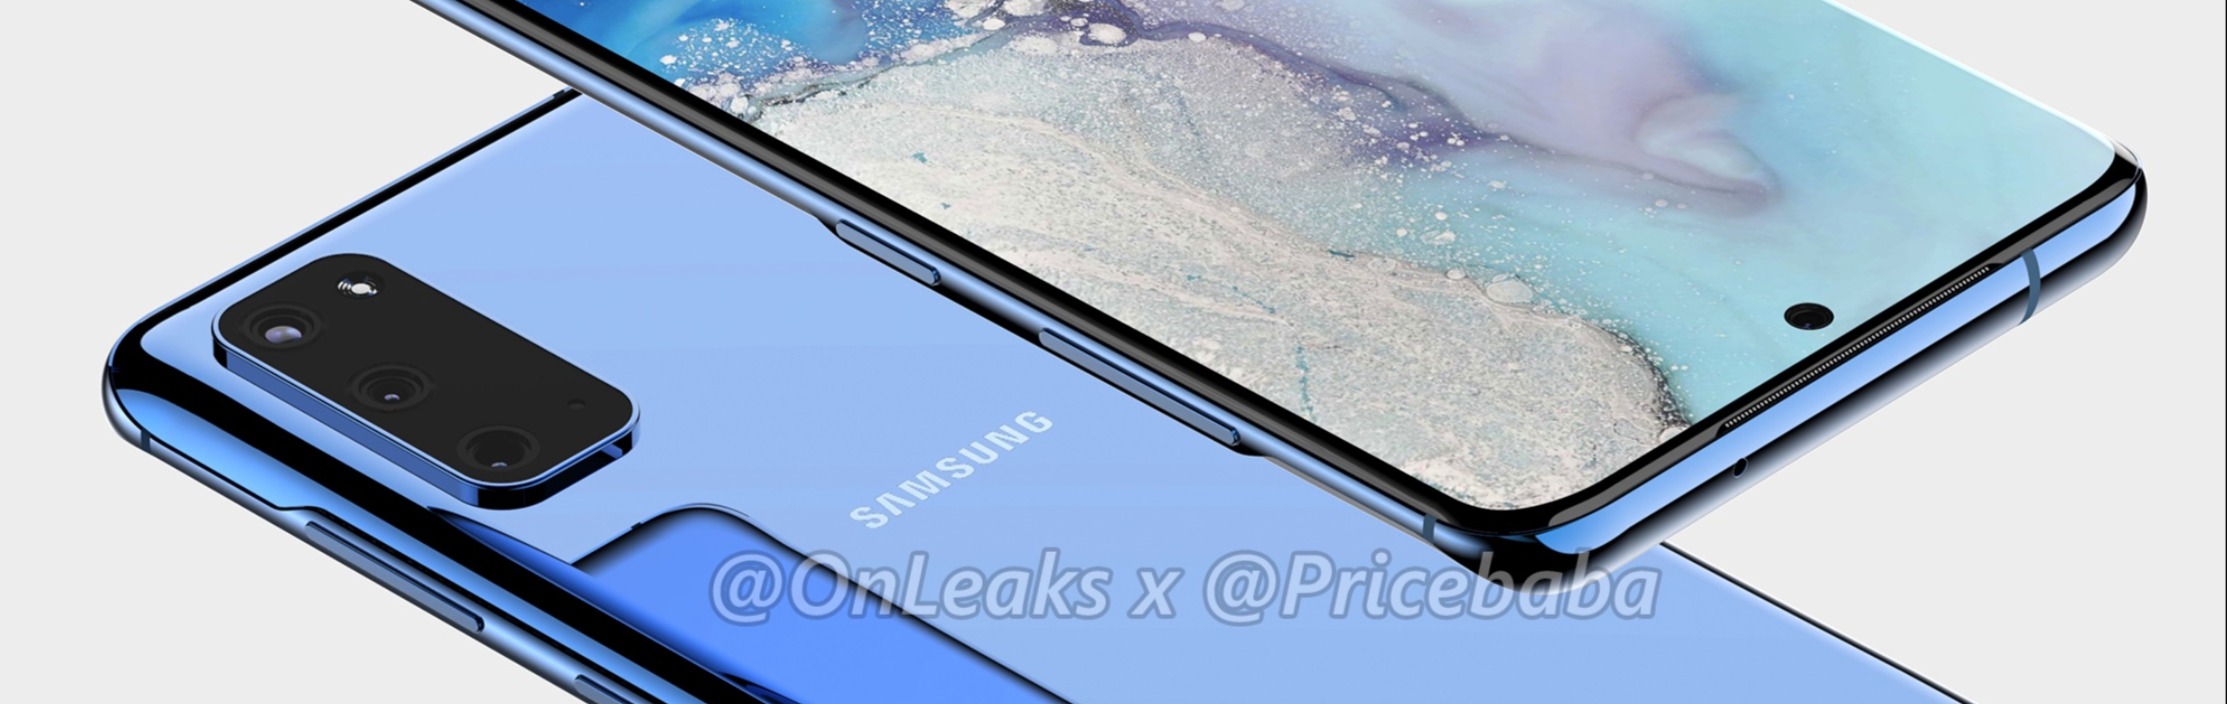 Samsung Galaxy S11e Leak